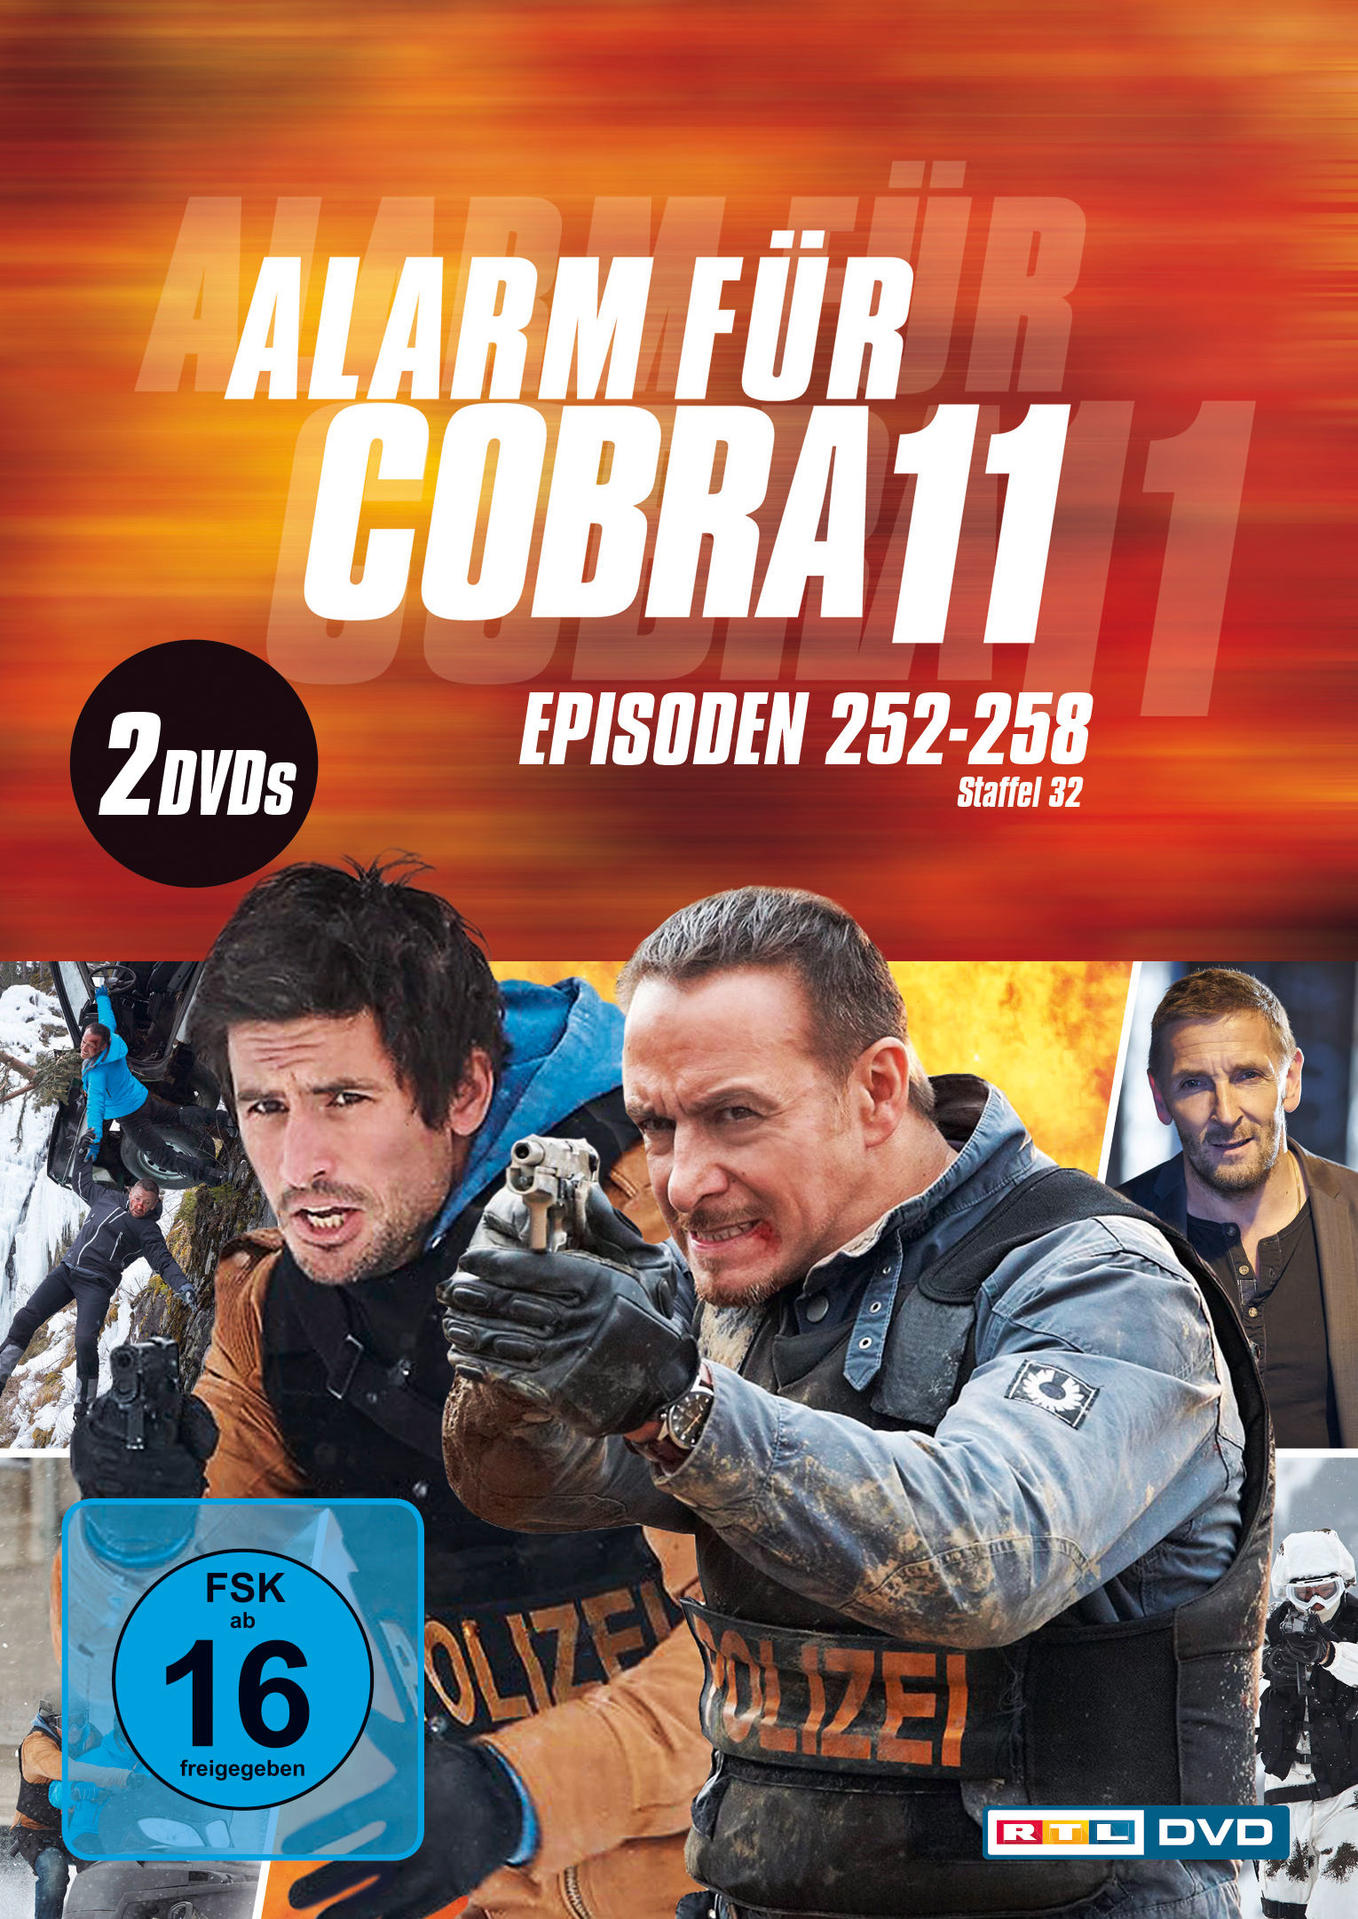 DVD - 32 Alarm Staffel 11 für Cobra